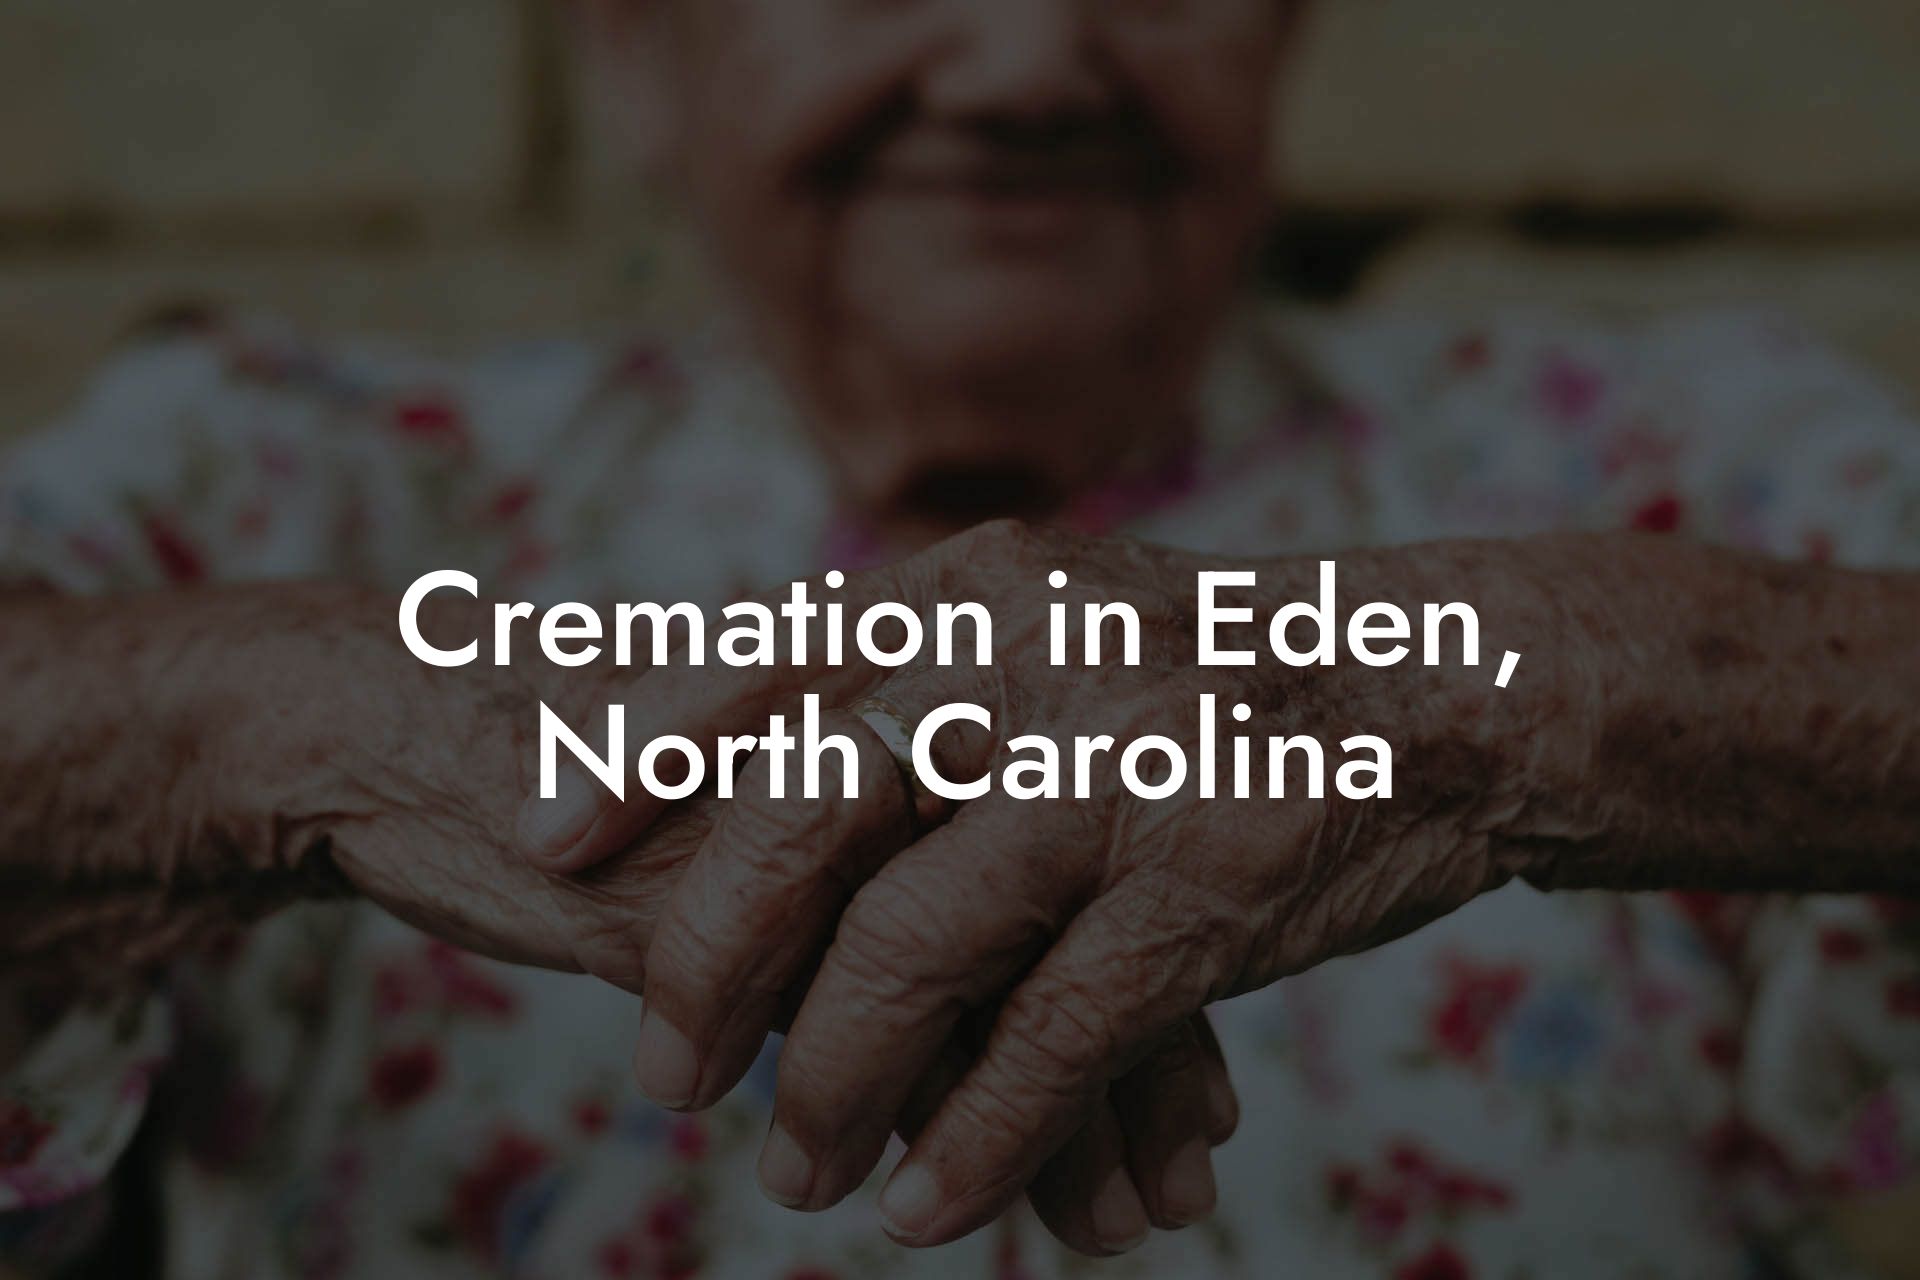 Cremation in Eden, North Carolina